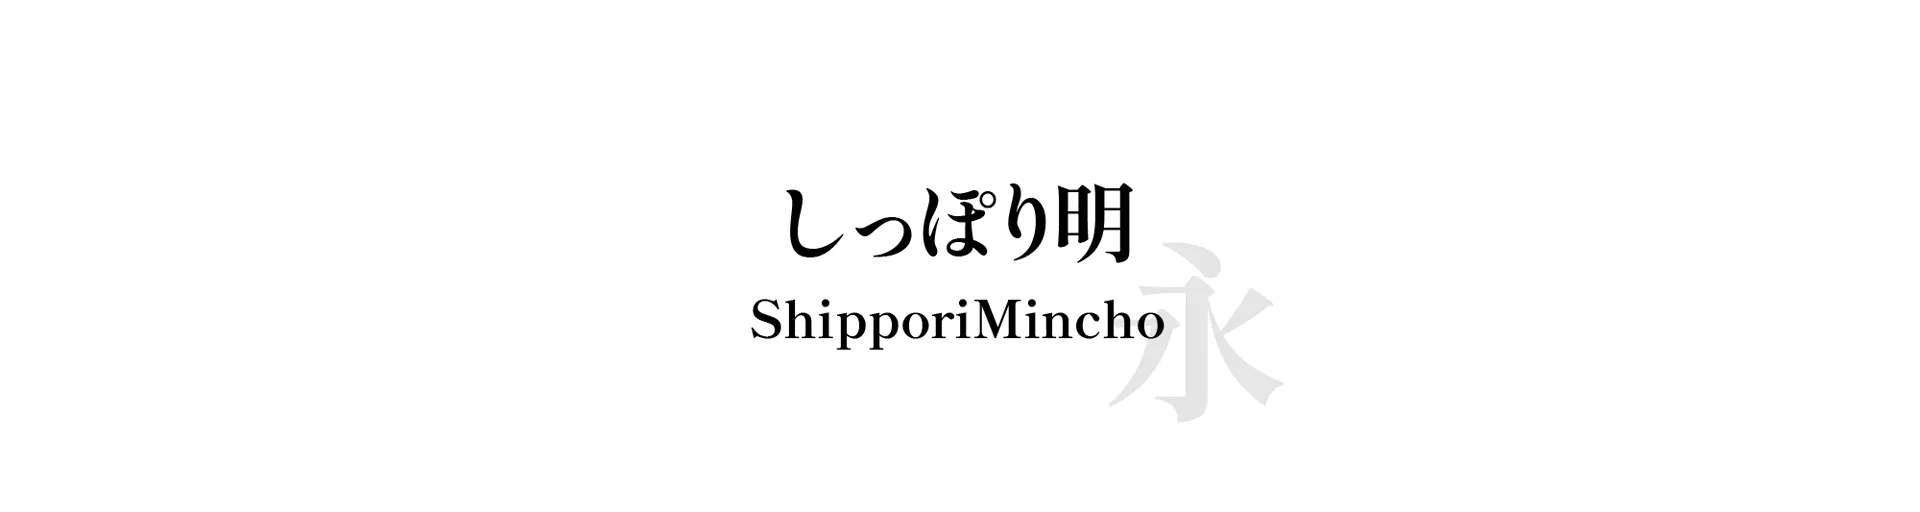 ShipporiMincho